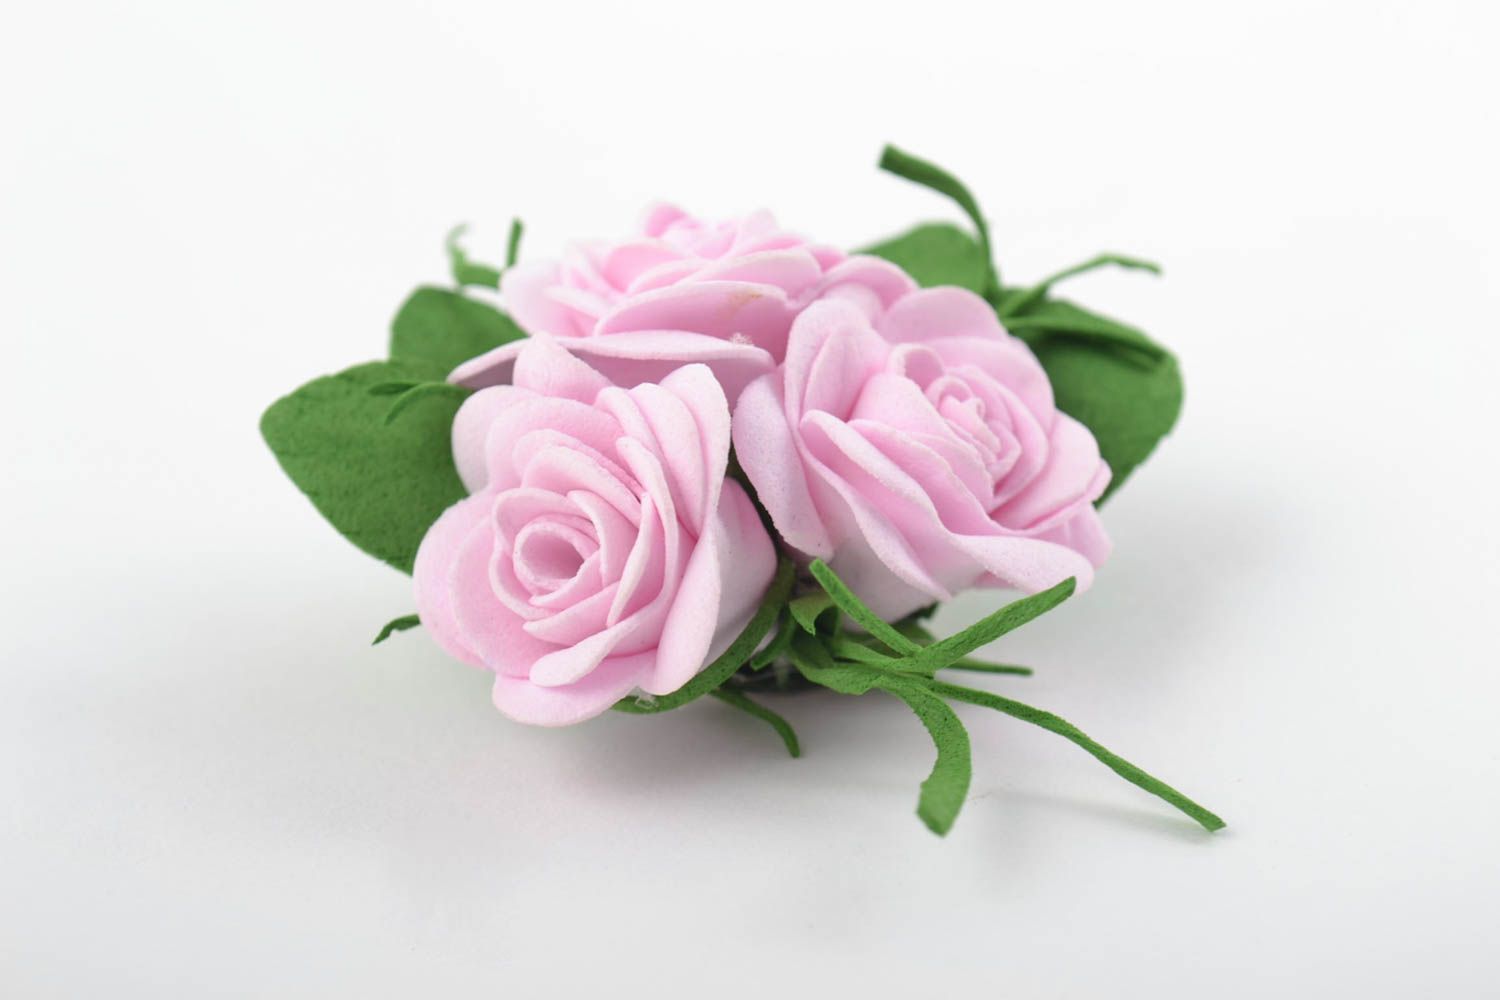 Handmade hair brooch with flowers made of pink foamiran designer gift     photo 9